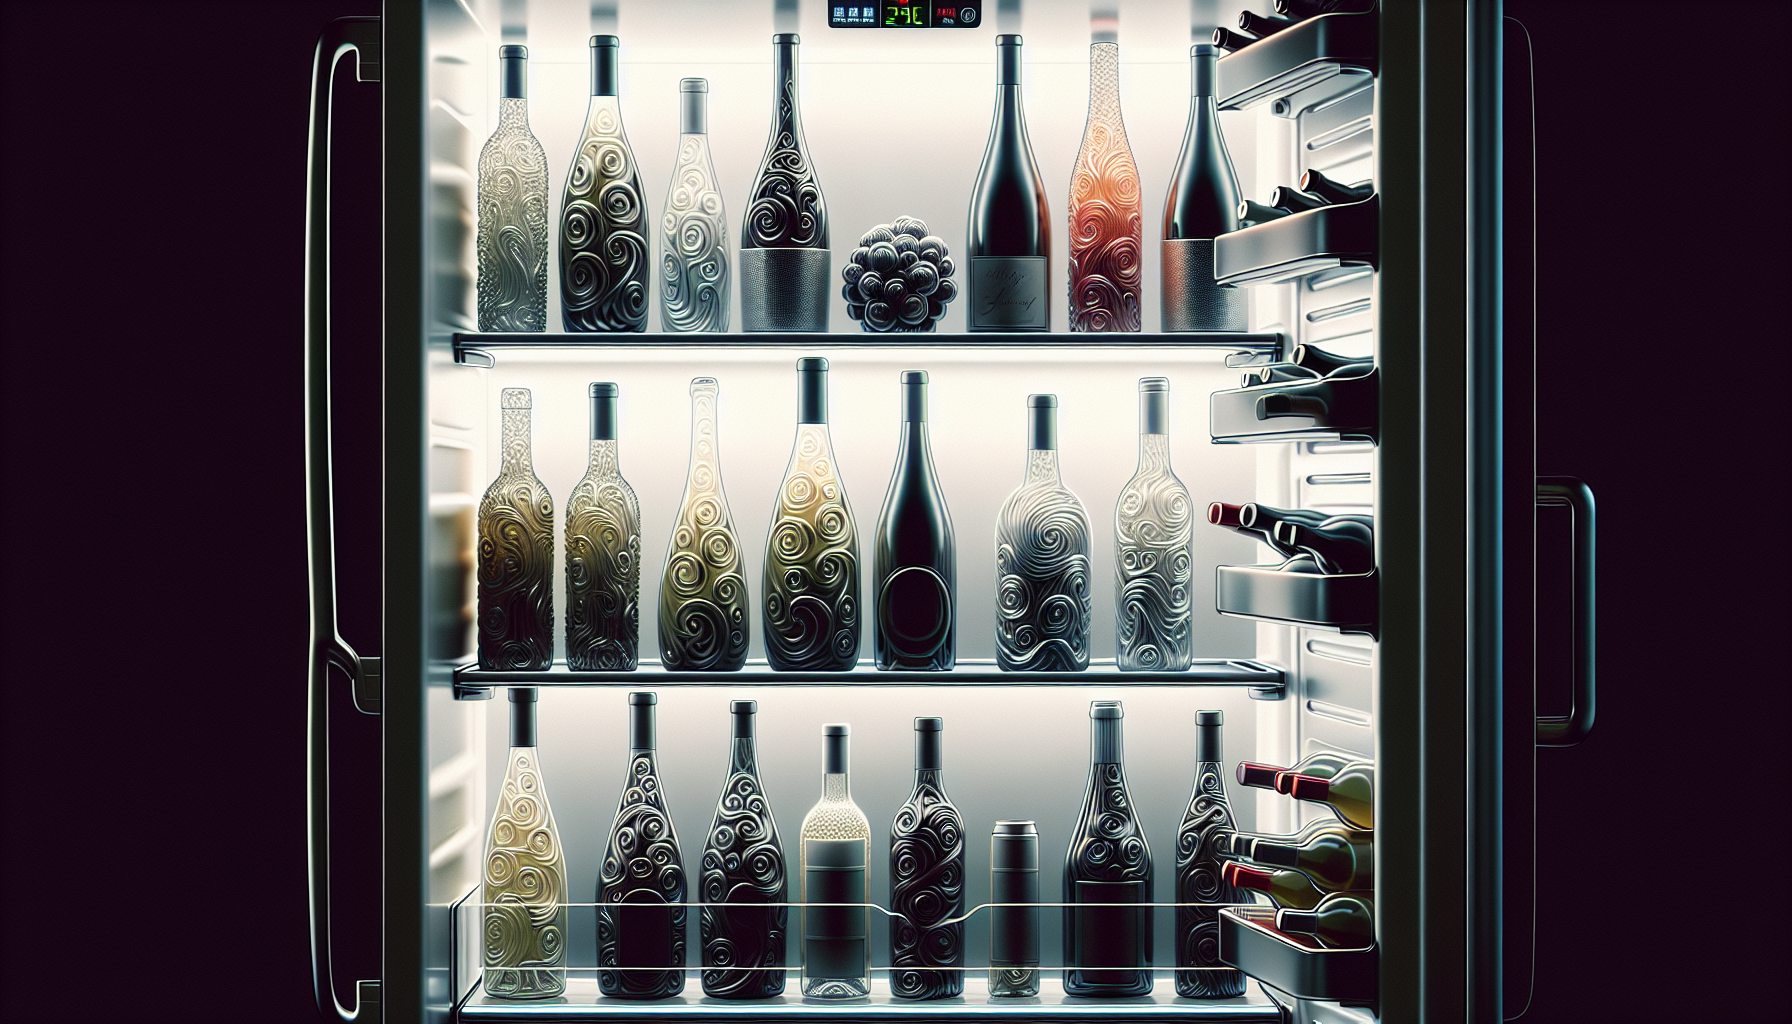 Refrigerating opened wine bottles